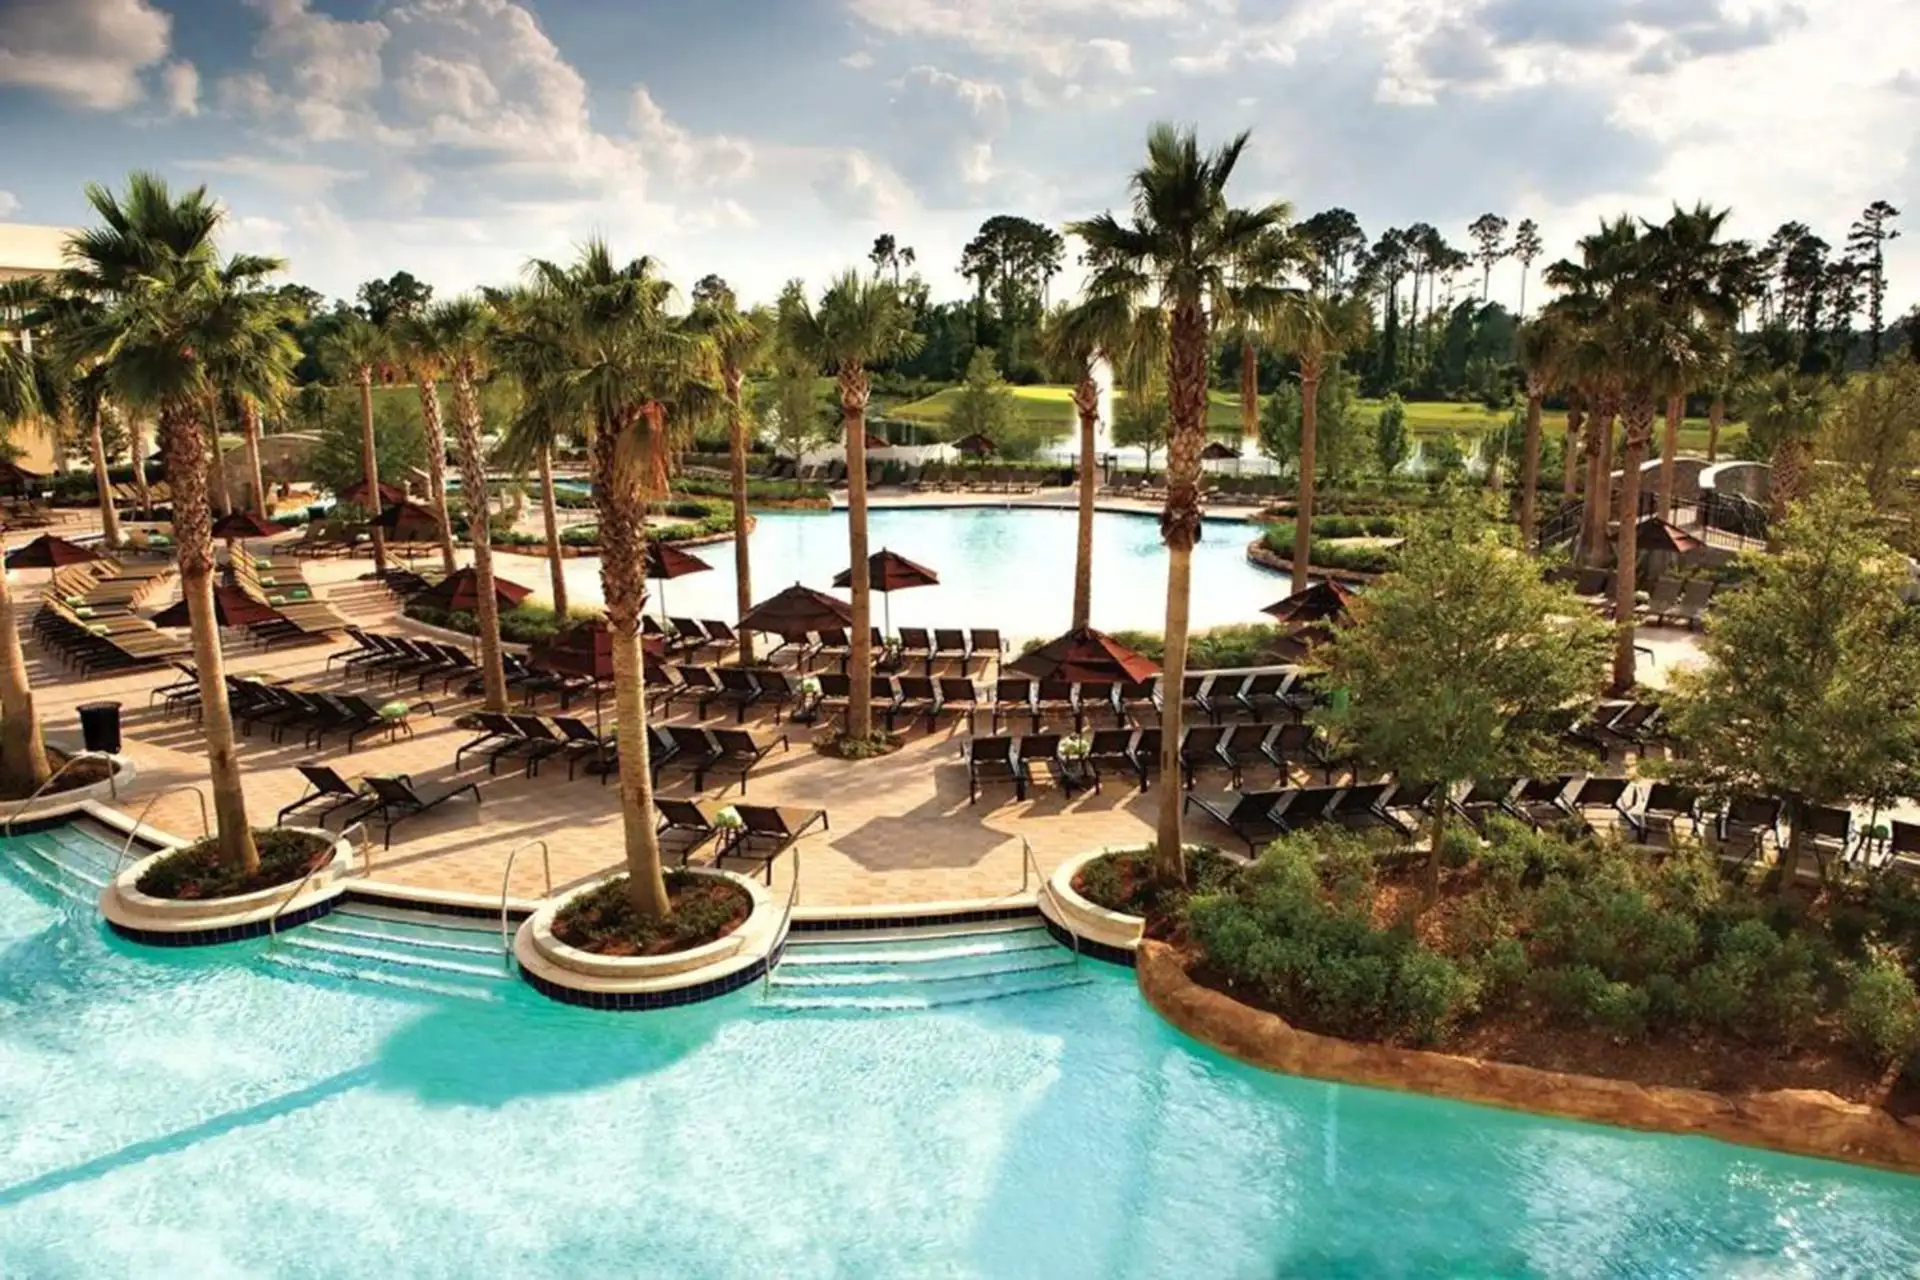 Pools at Hilton Orlando Bonnet Creek in Florida; Courtesy of Hilton Orlando Bonnet Creek